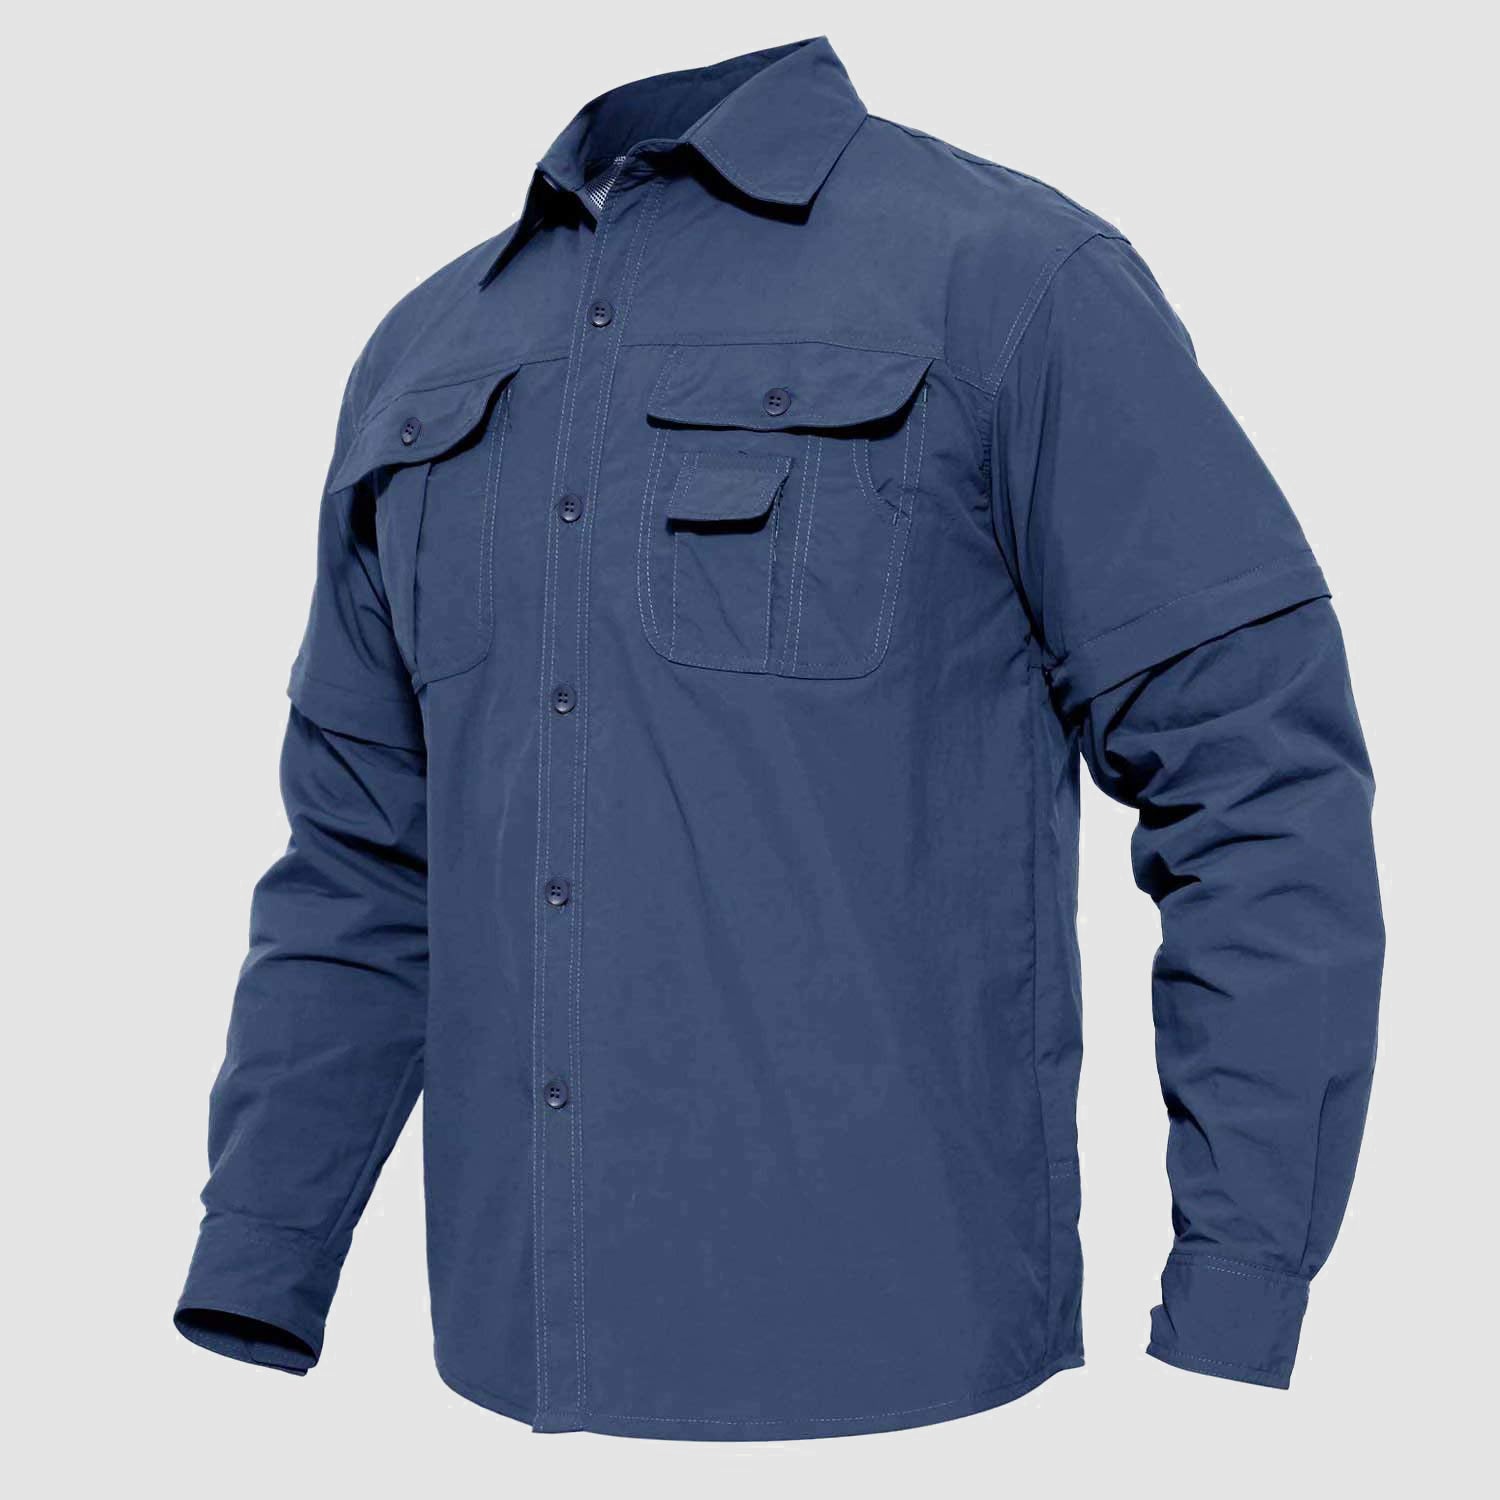 Mens Fishing Hiking Shirts with Detachable Sleeves Long/Short Sleeve Quick Dry, Royal Blue / L